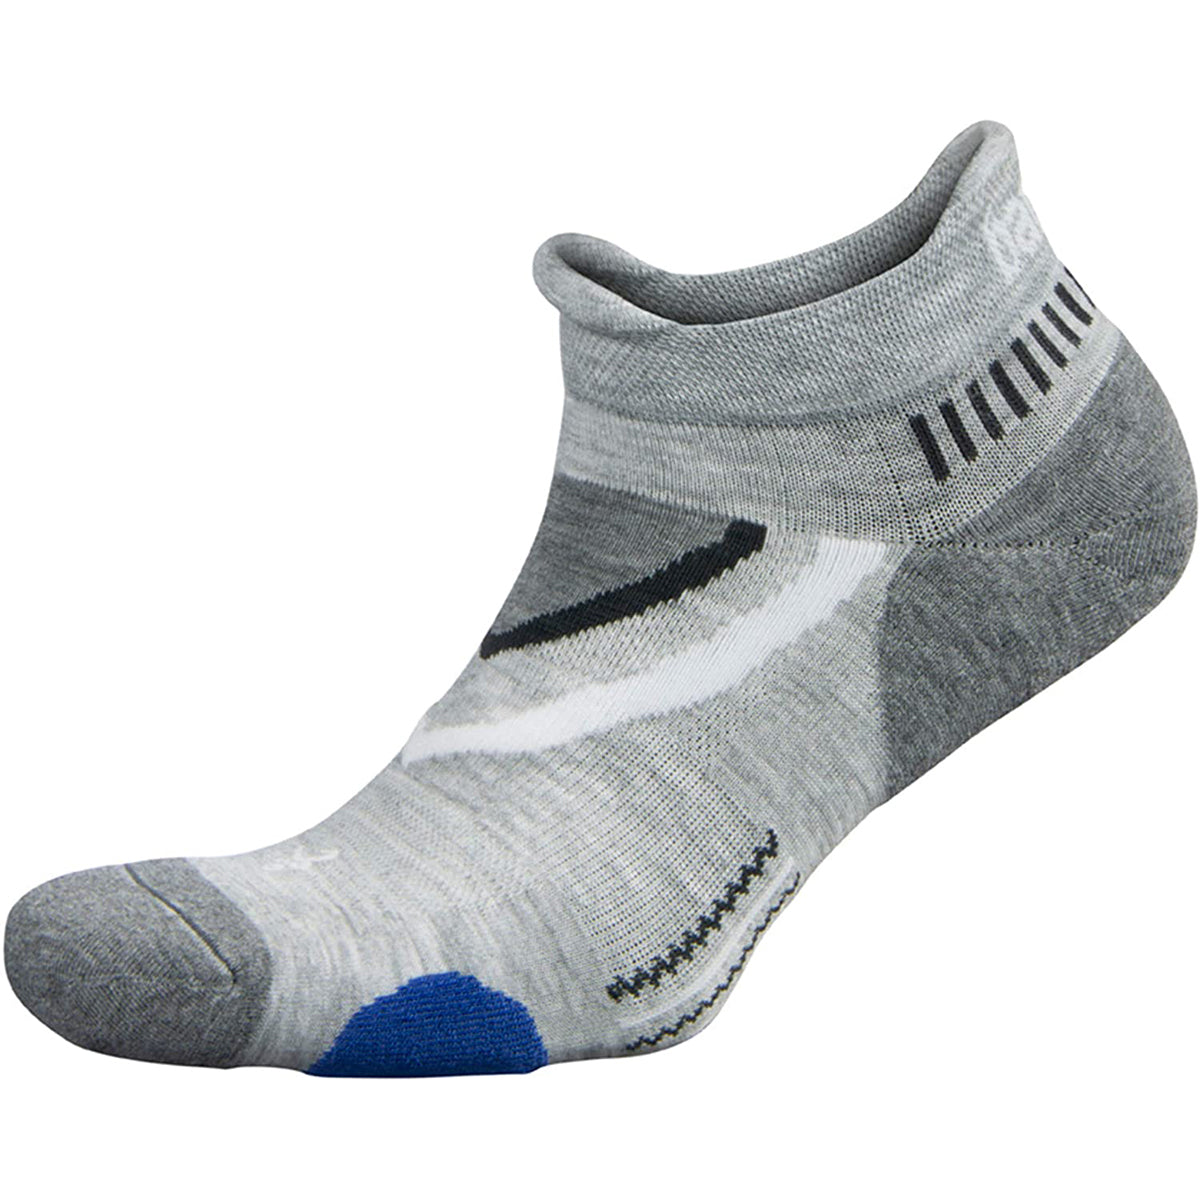 Balega UltraGlide No Show Running Socks - Midgray/Charcoal Balega